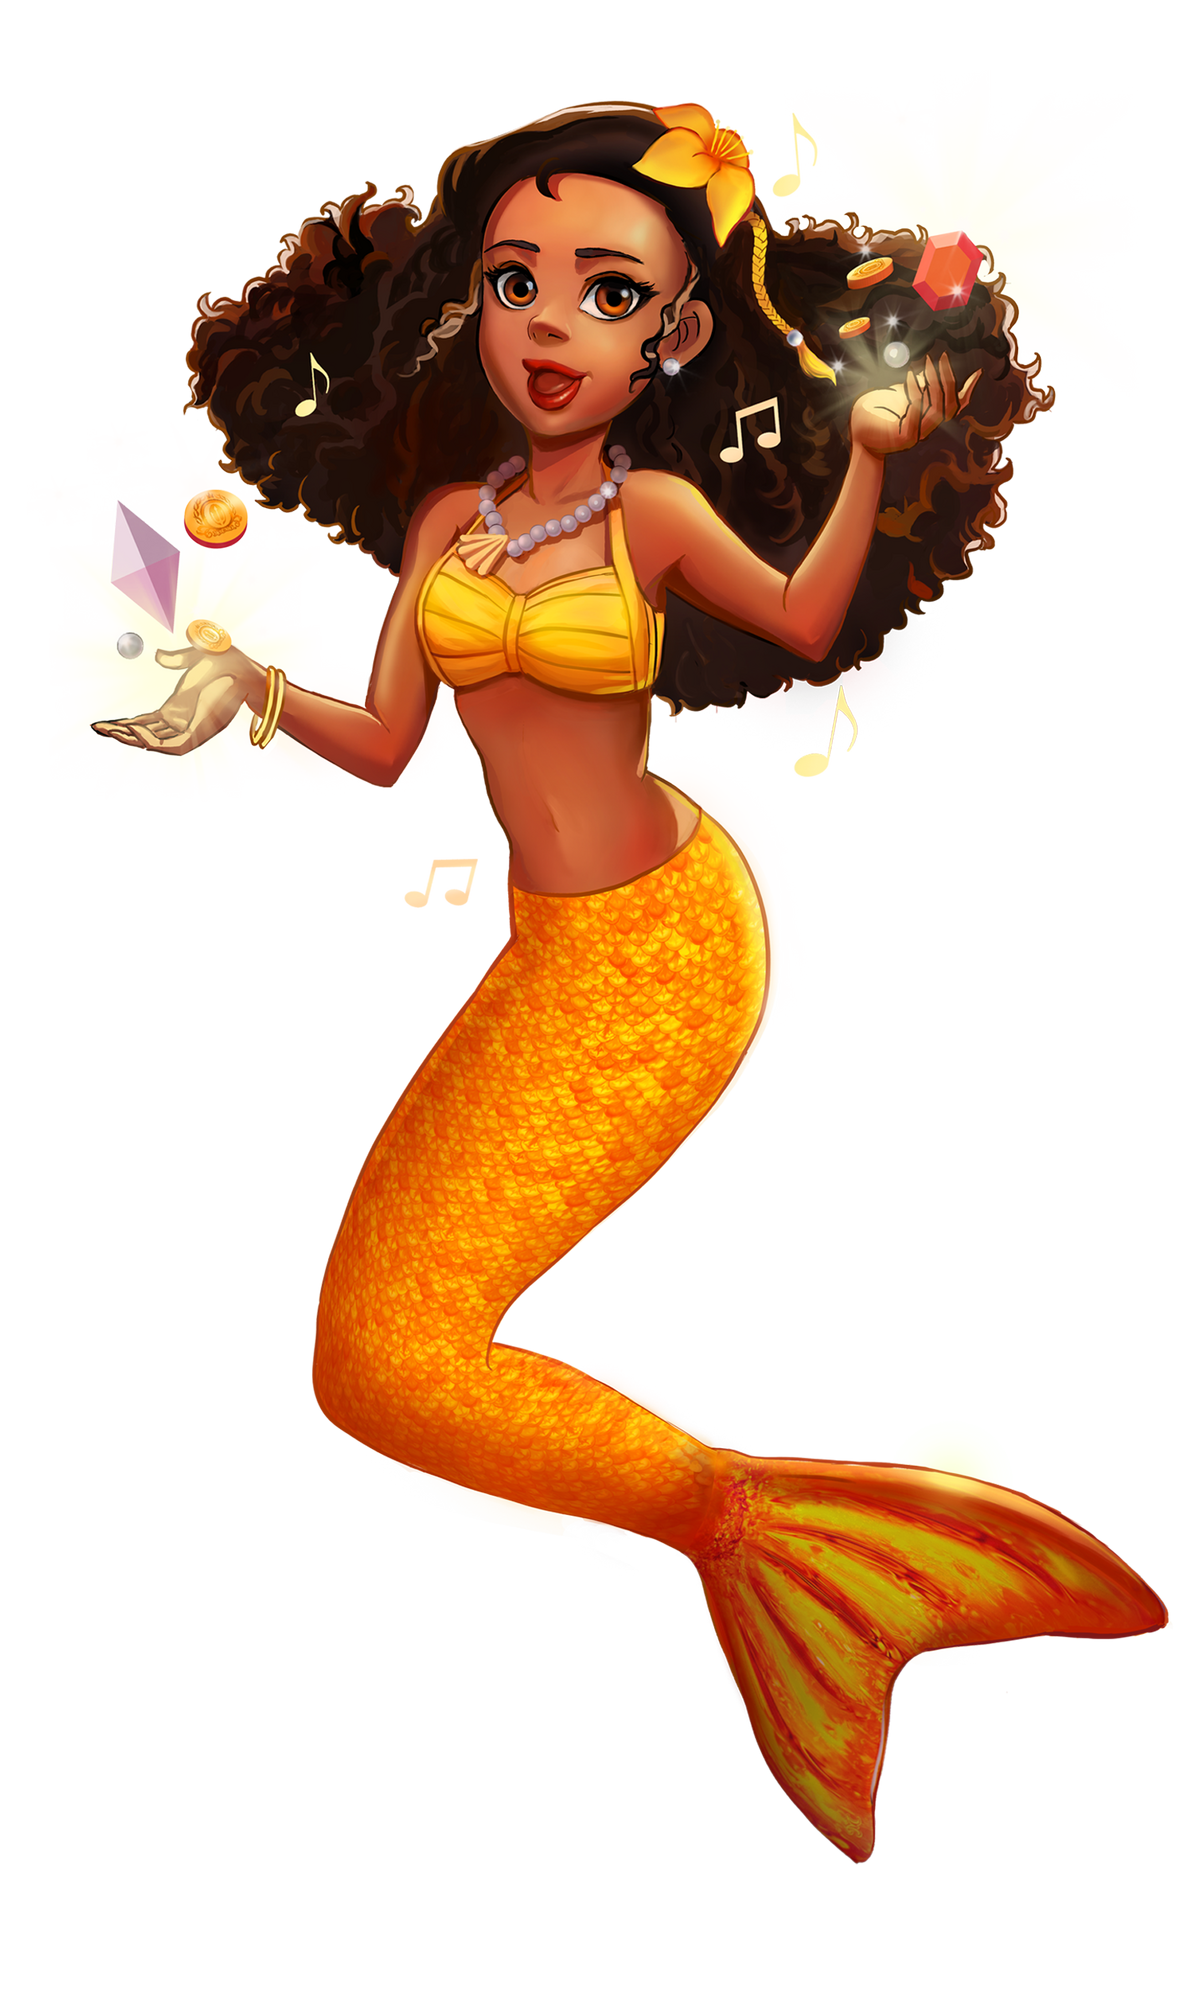 Category:Fin Fun Mermaid, Mermaid Wiki